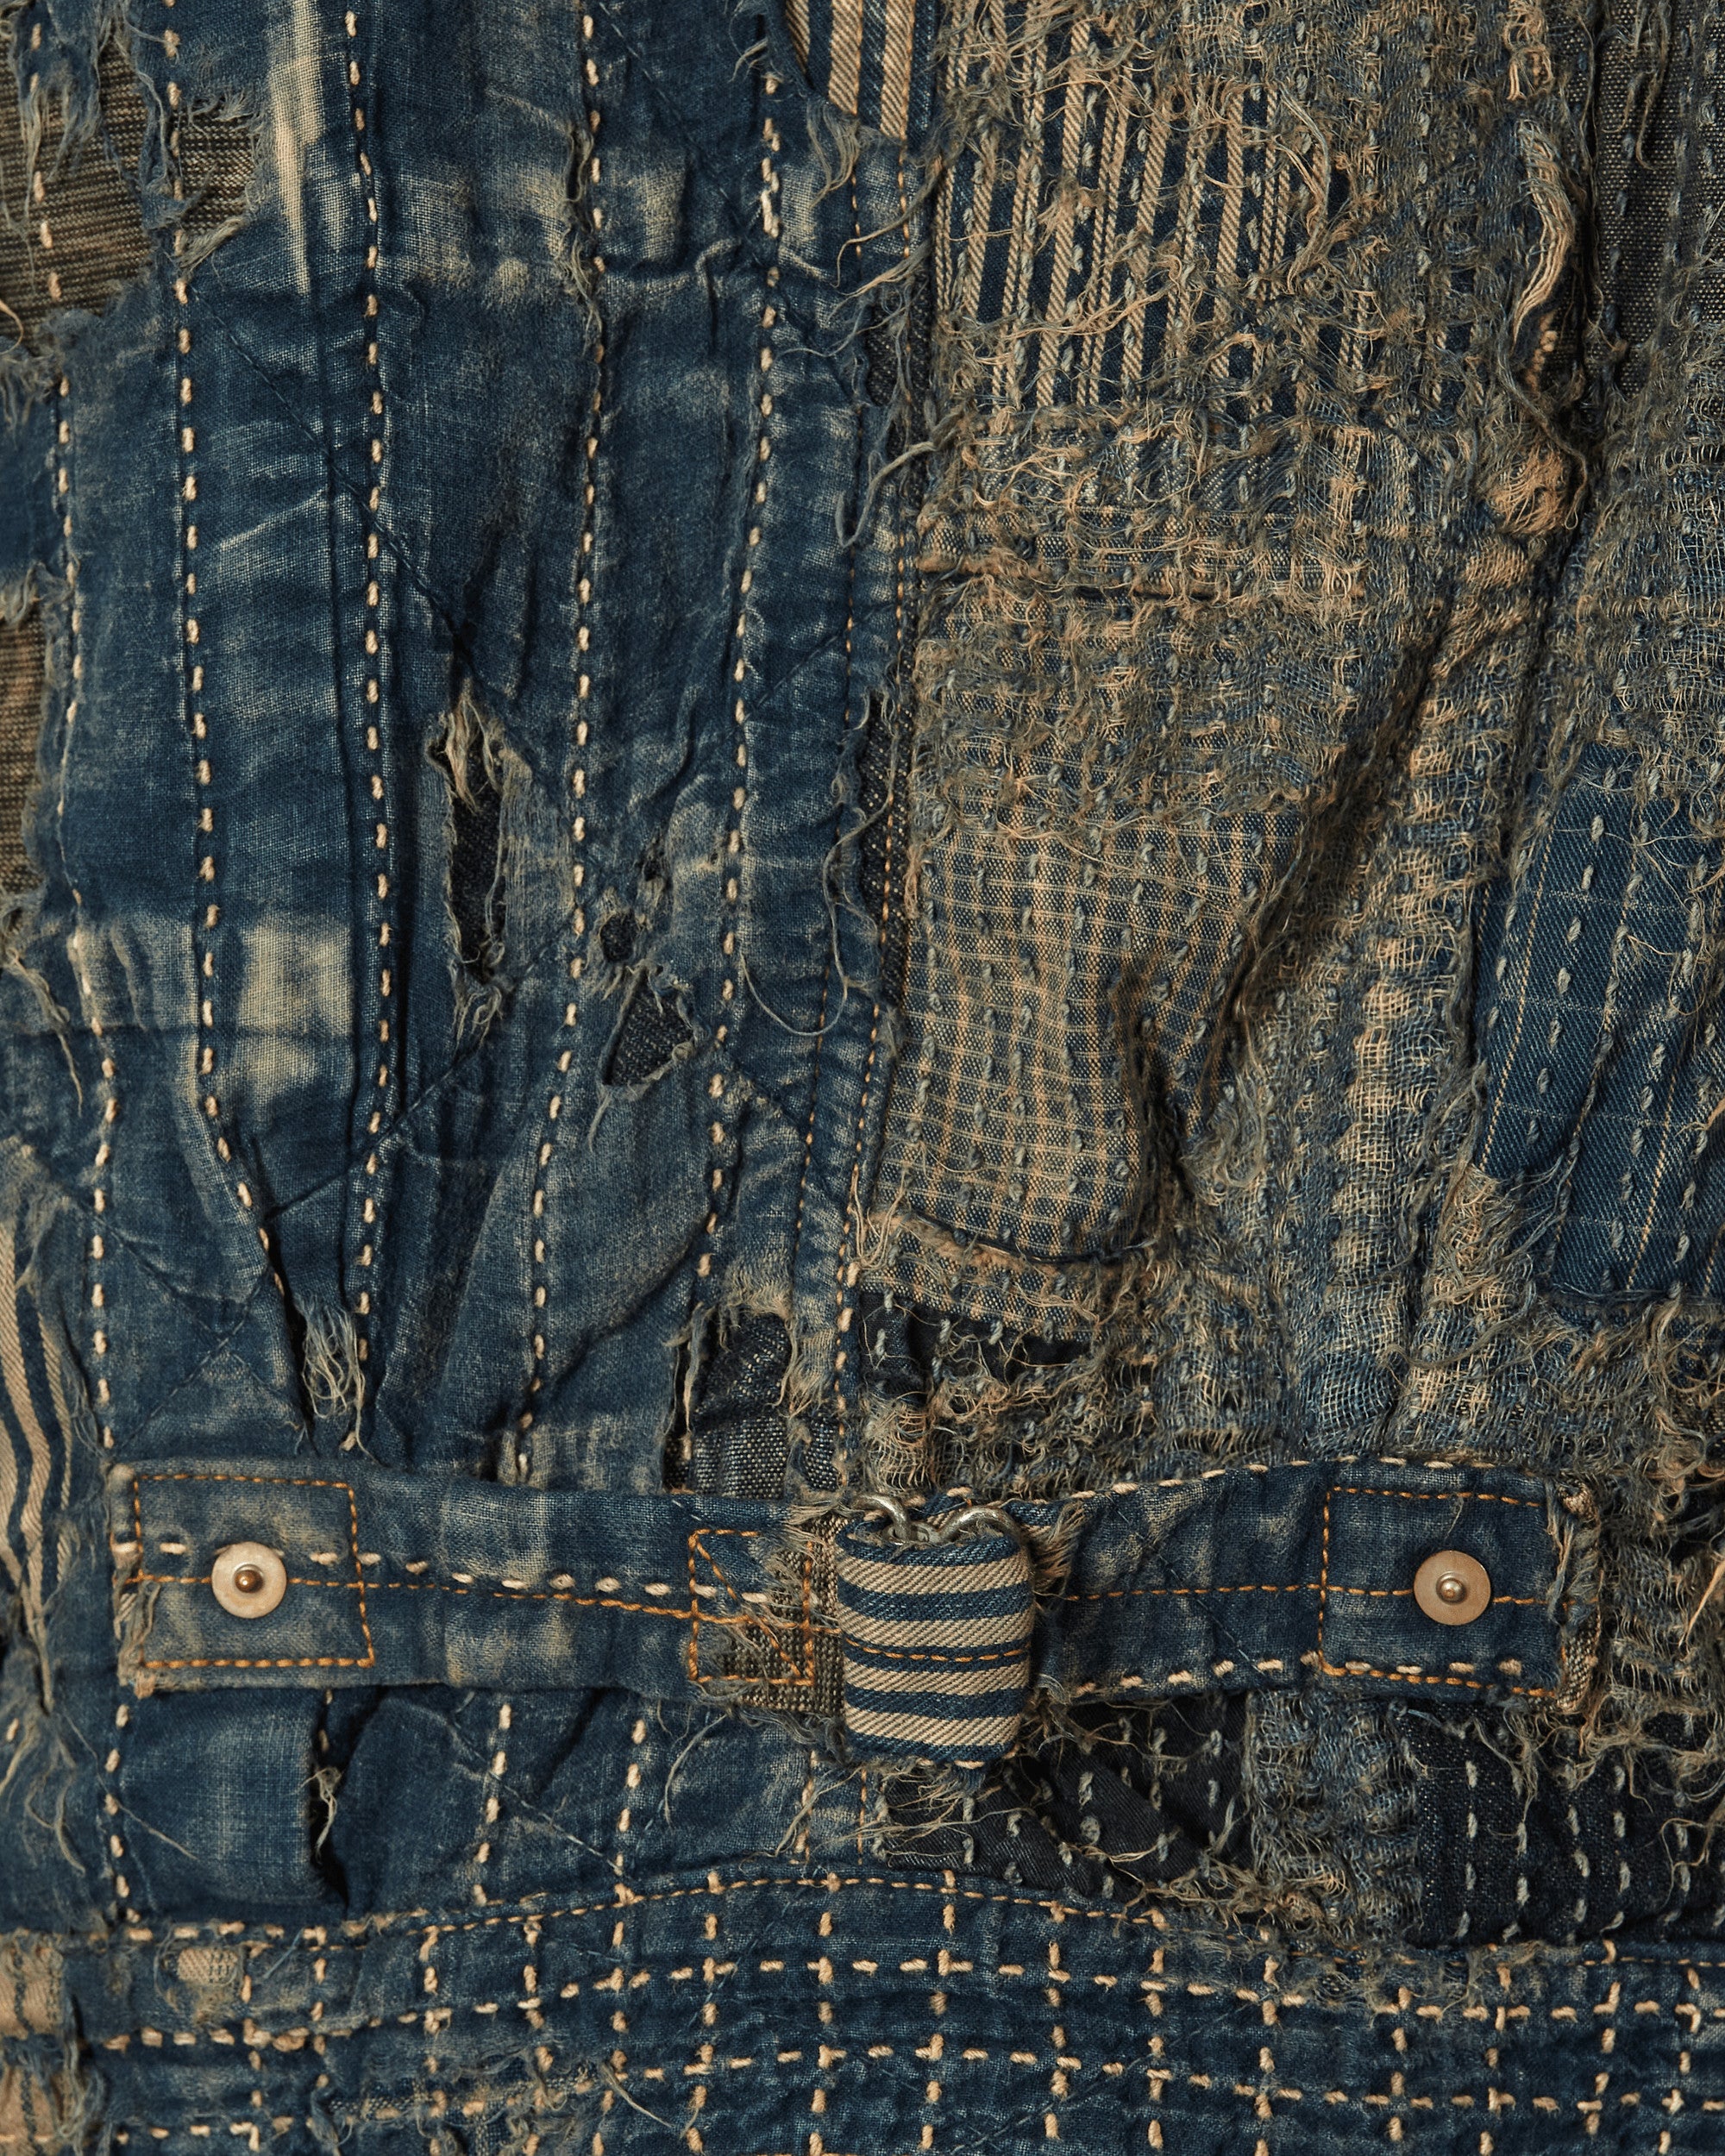 Kapital Boro Patchwork Jacket - Blue Outerwear, Clothing - WKAPL20008